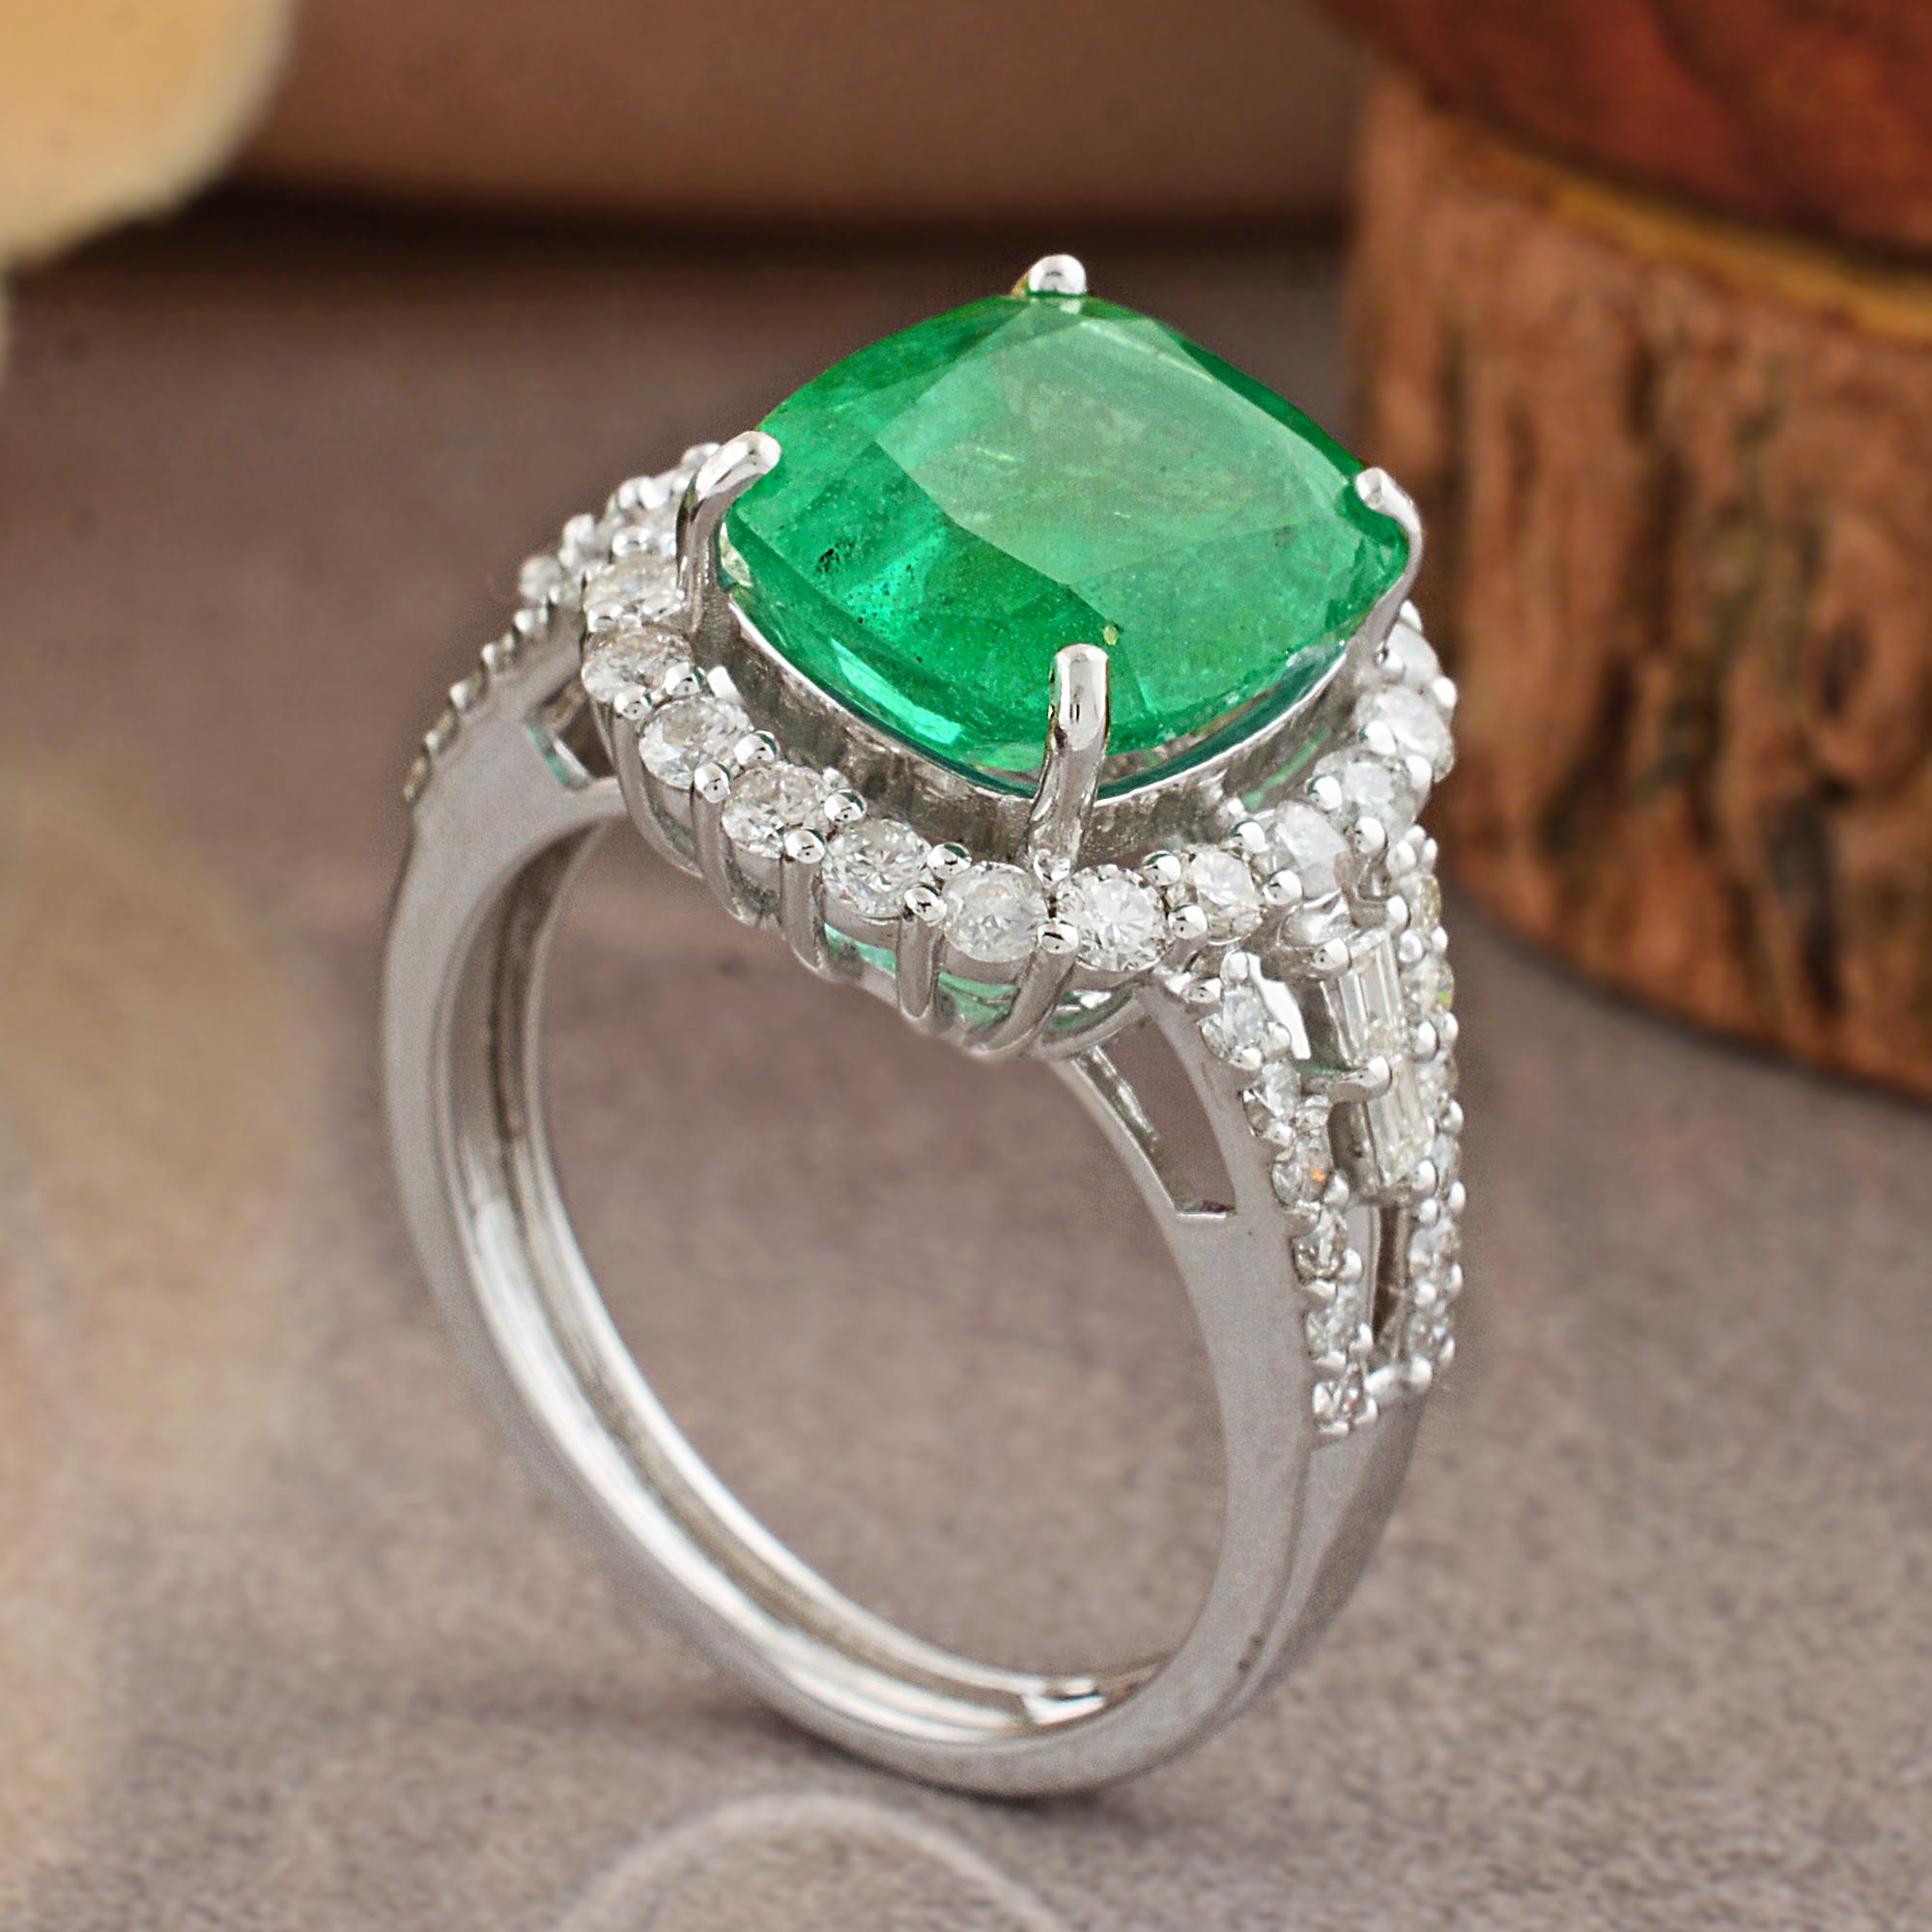 For Sale:  Natural Emerald Gemstone Cocktail Ring Diamond 10 Karat White Gold Fine Jewelry 5